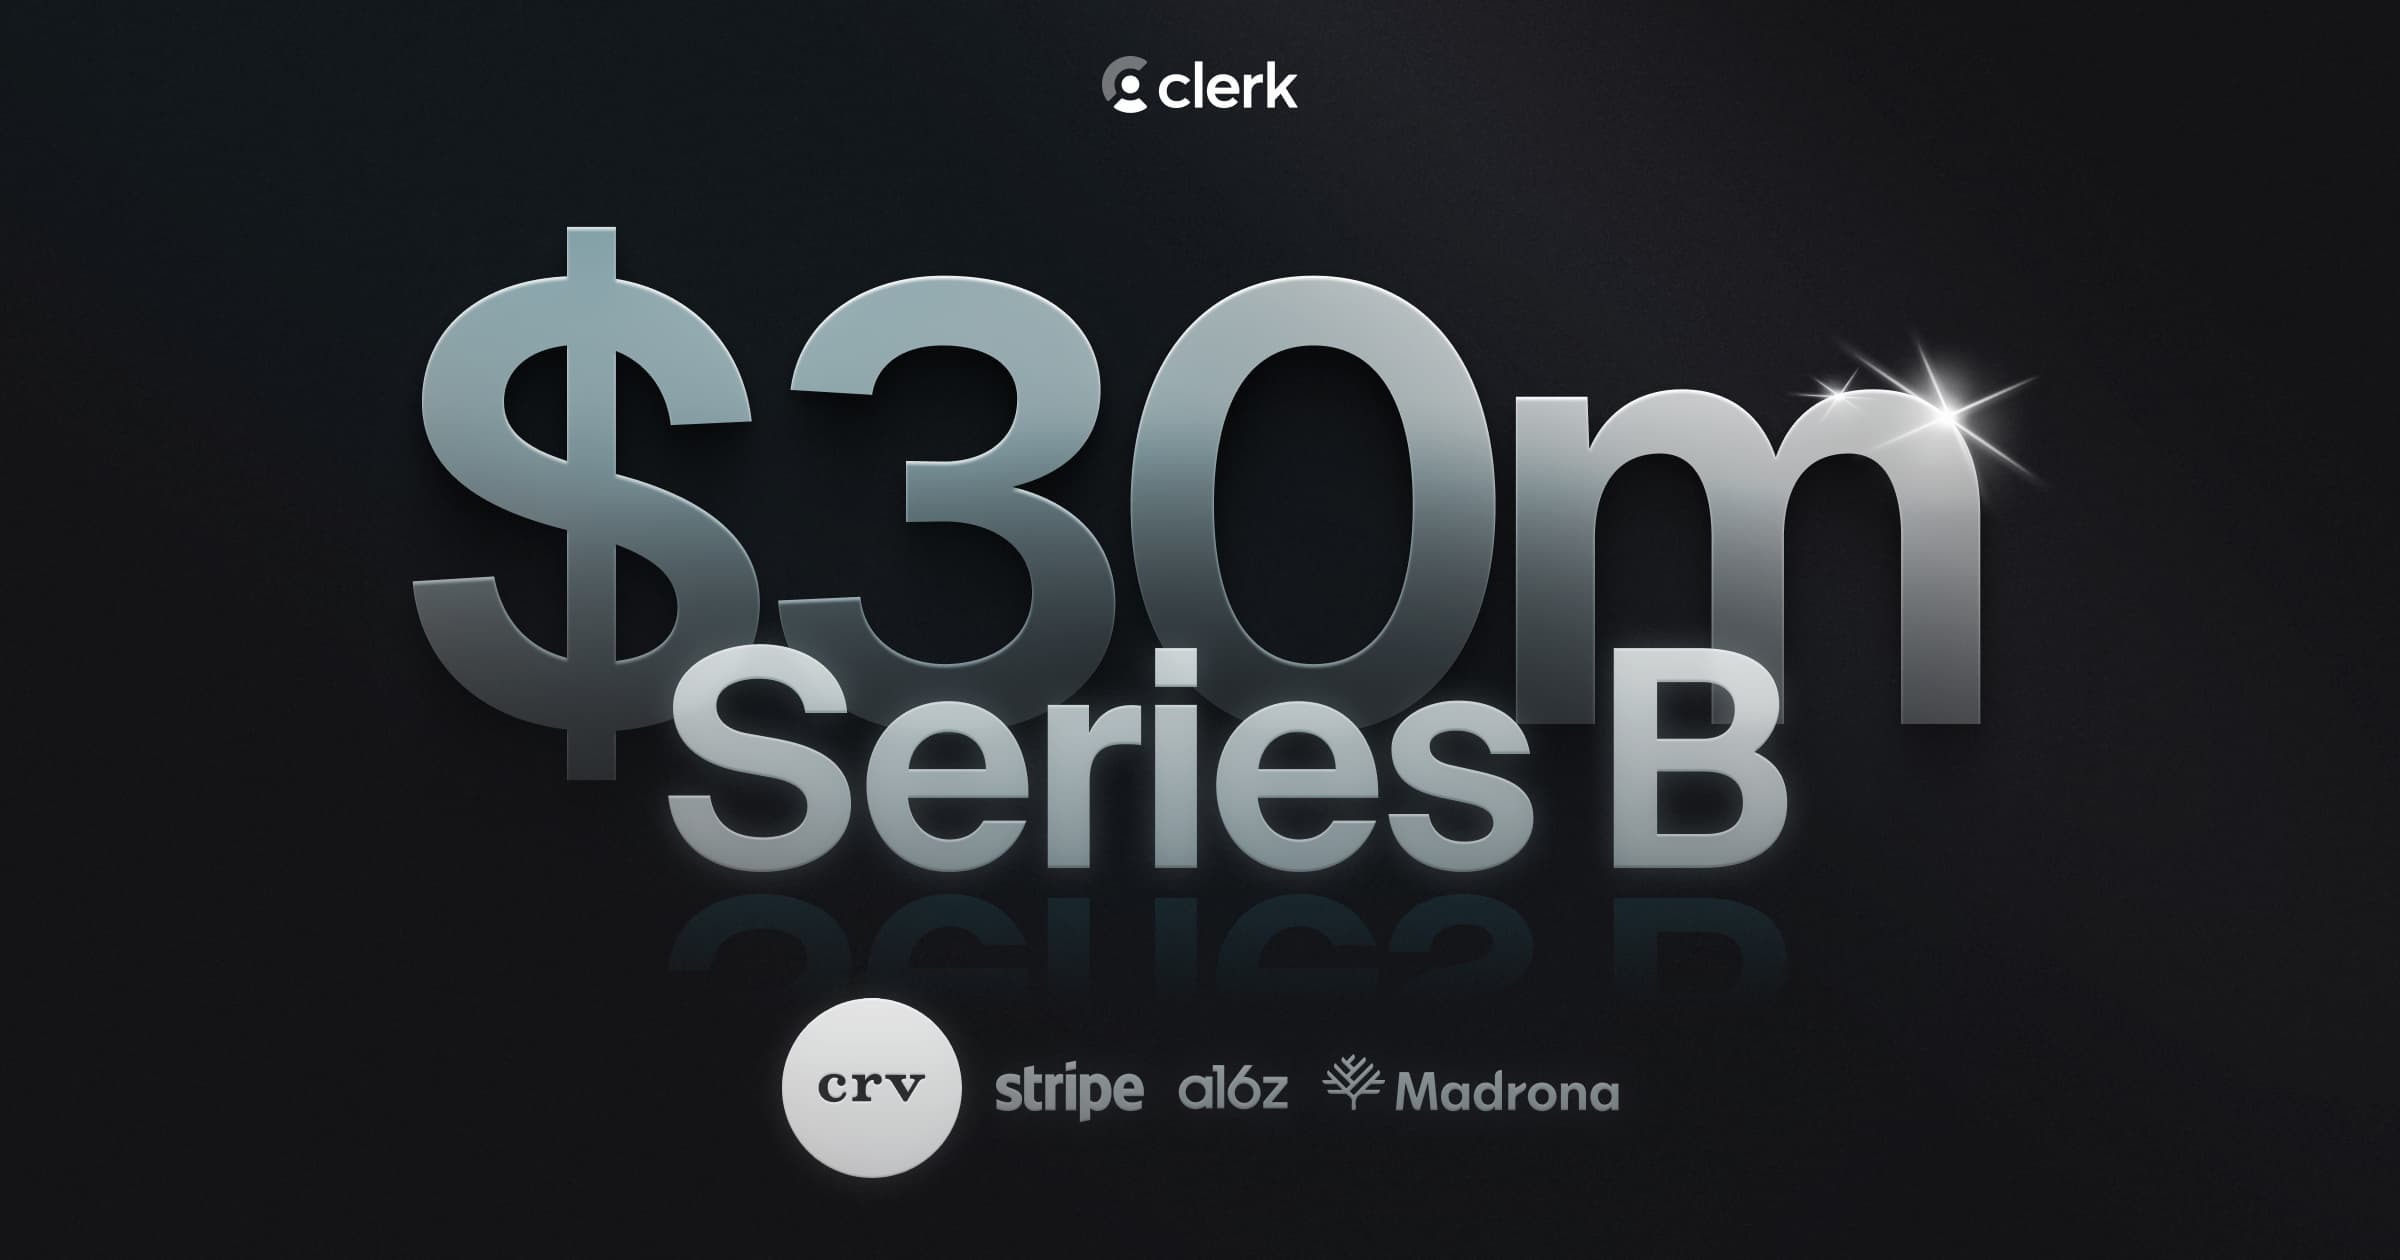 Clerk raises $30M Series B from CRV and Stripe | Clerk Blog